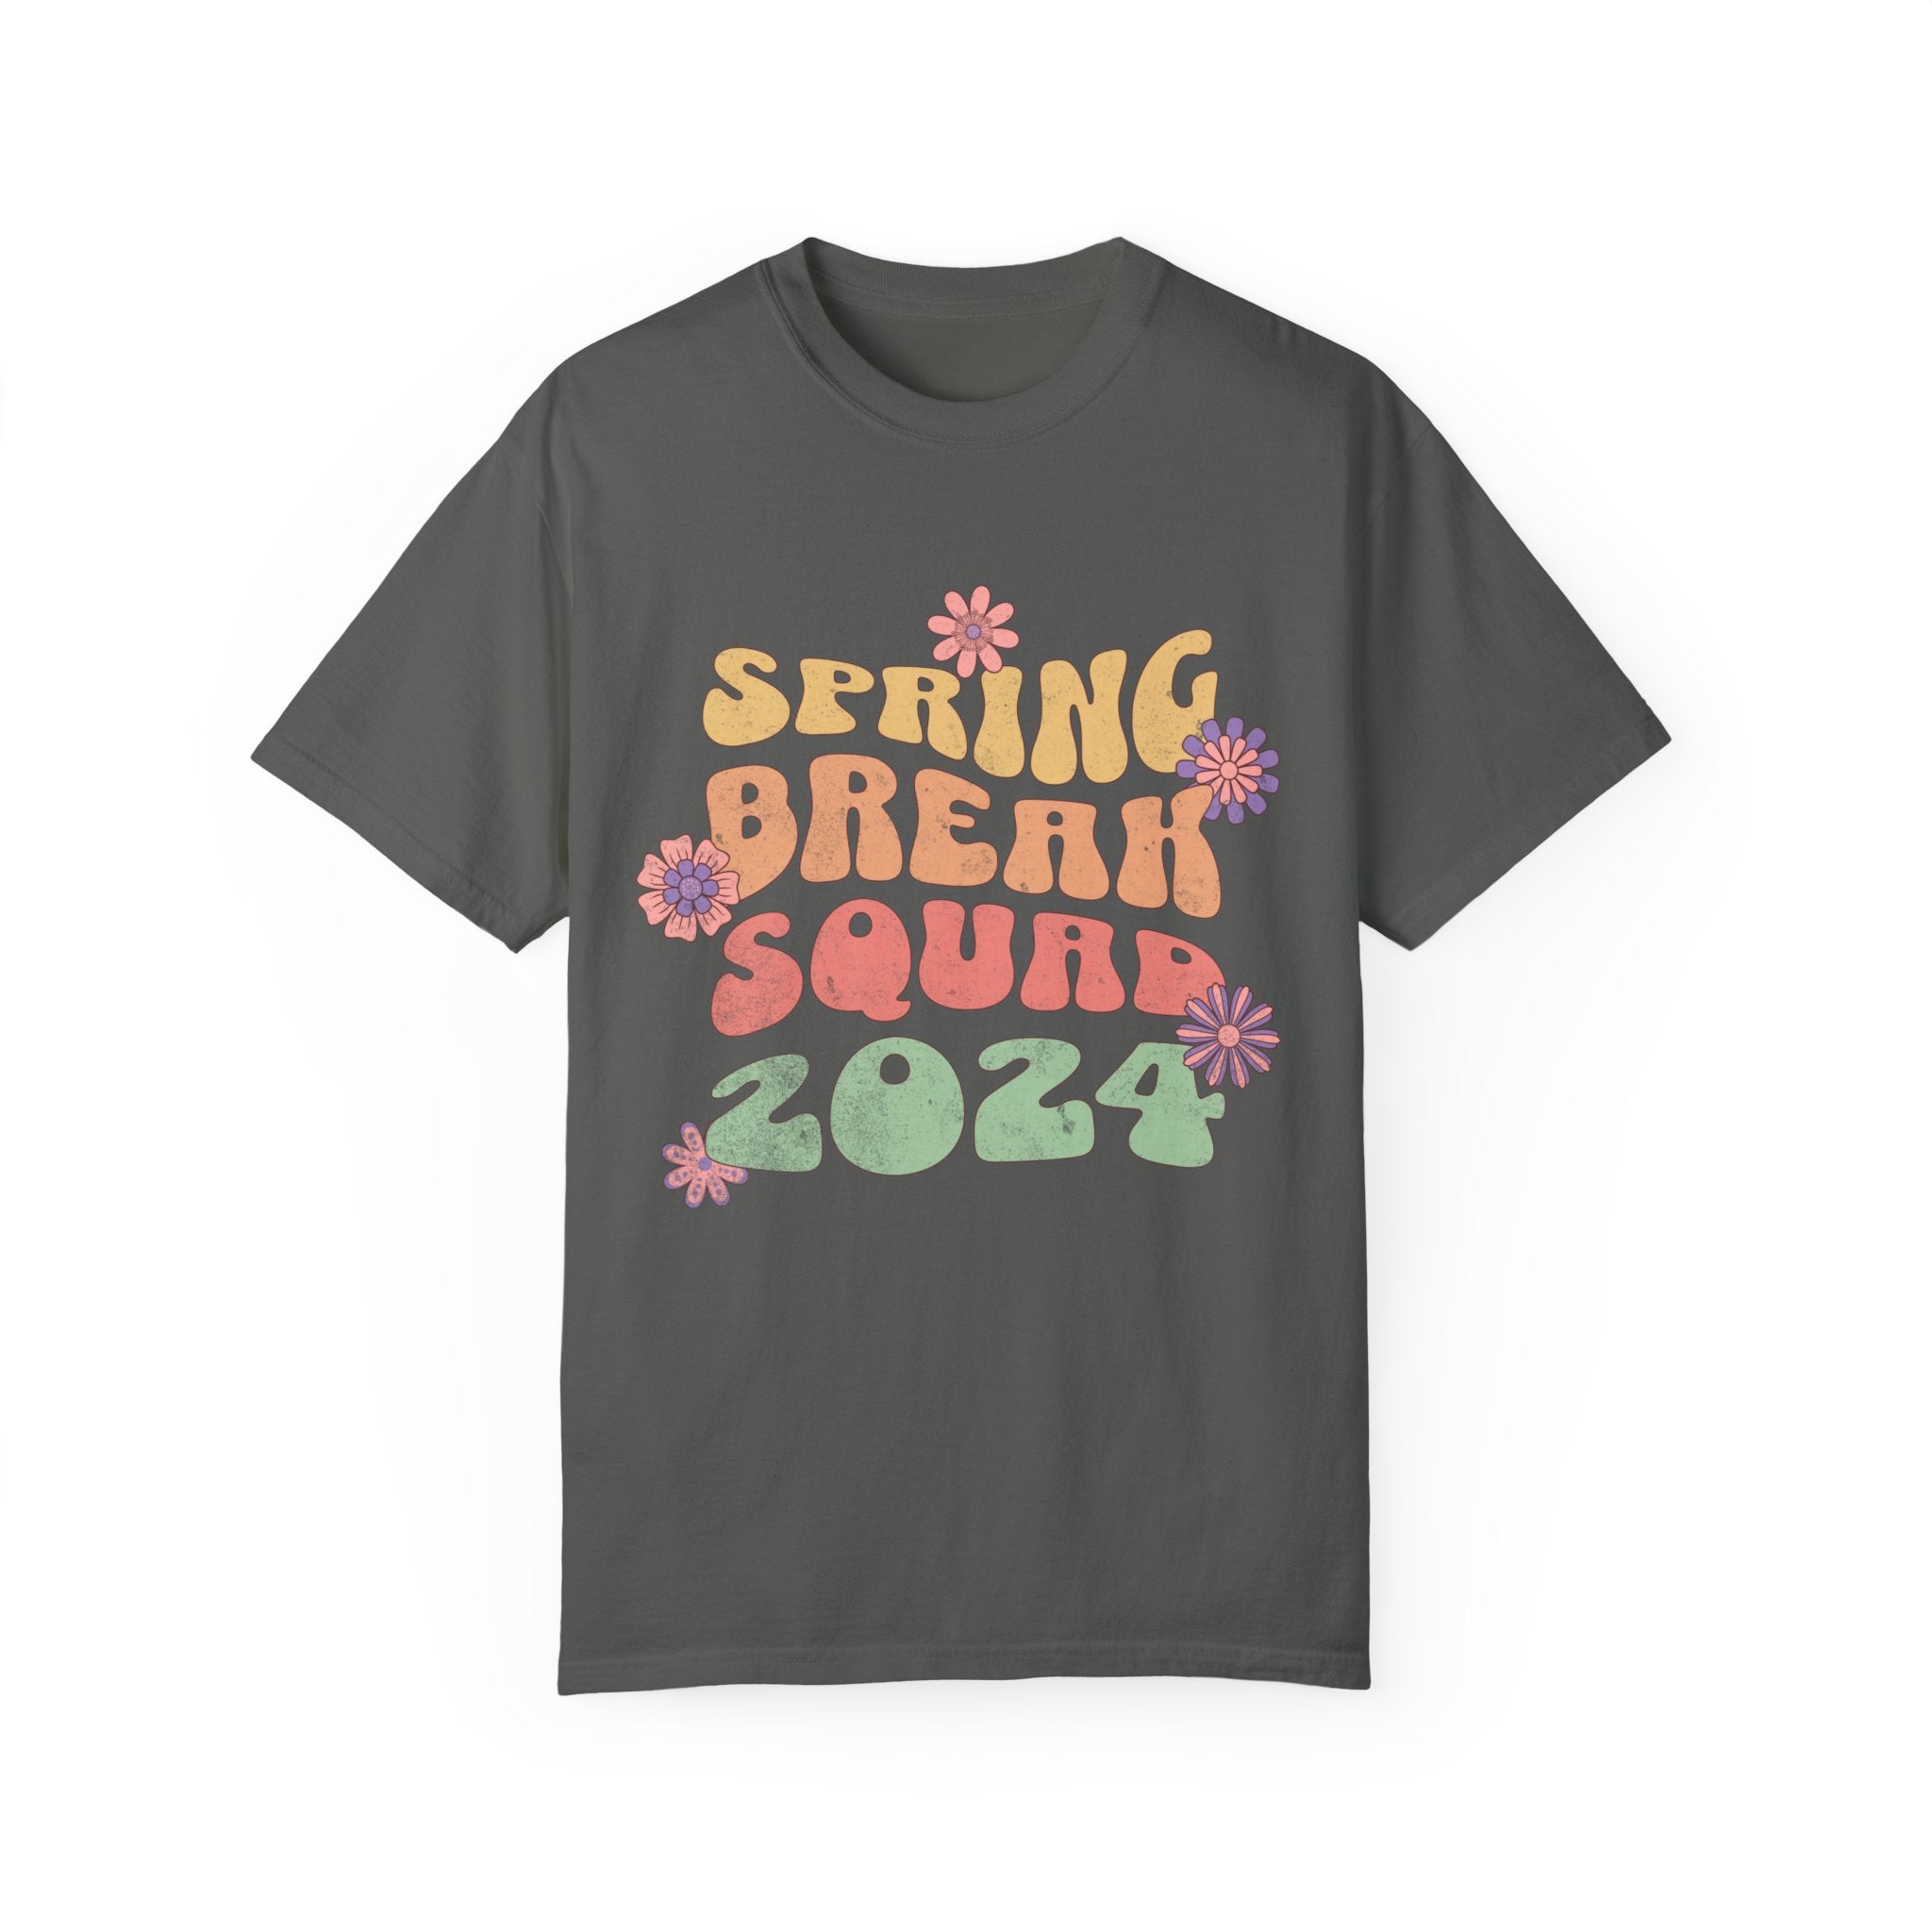 Spring Break Squad 2024 Shirt